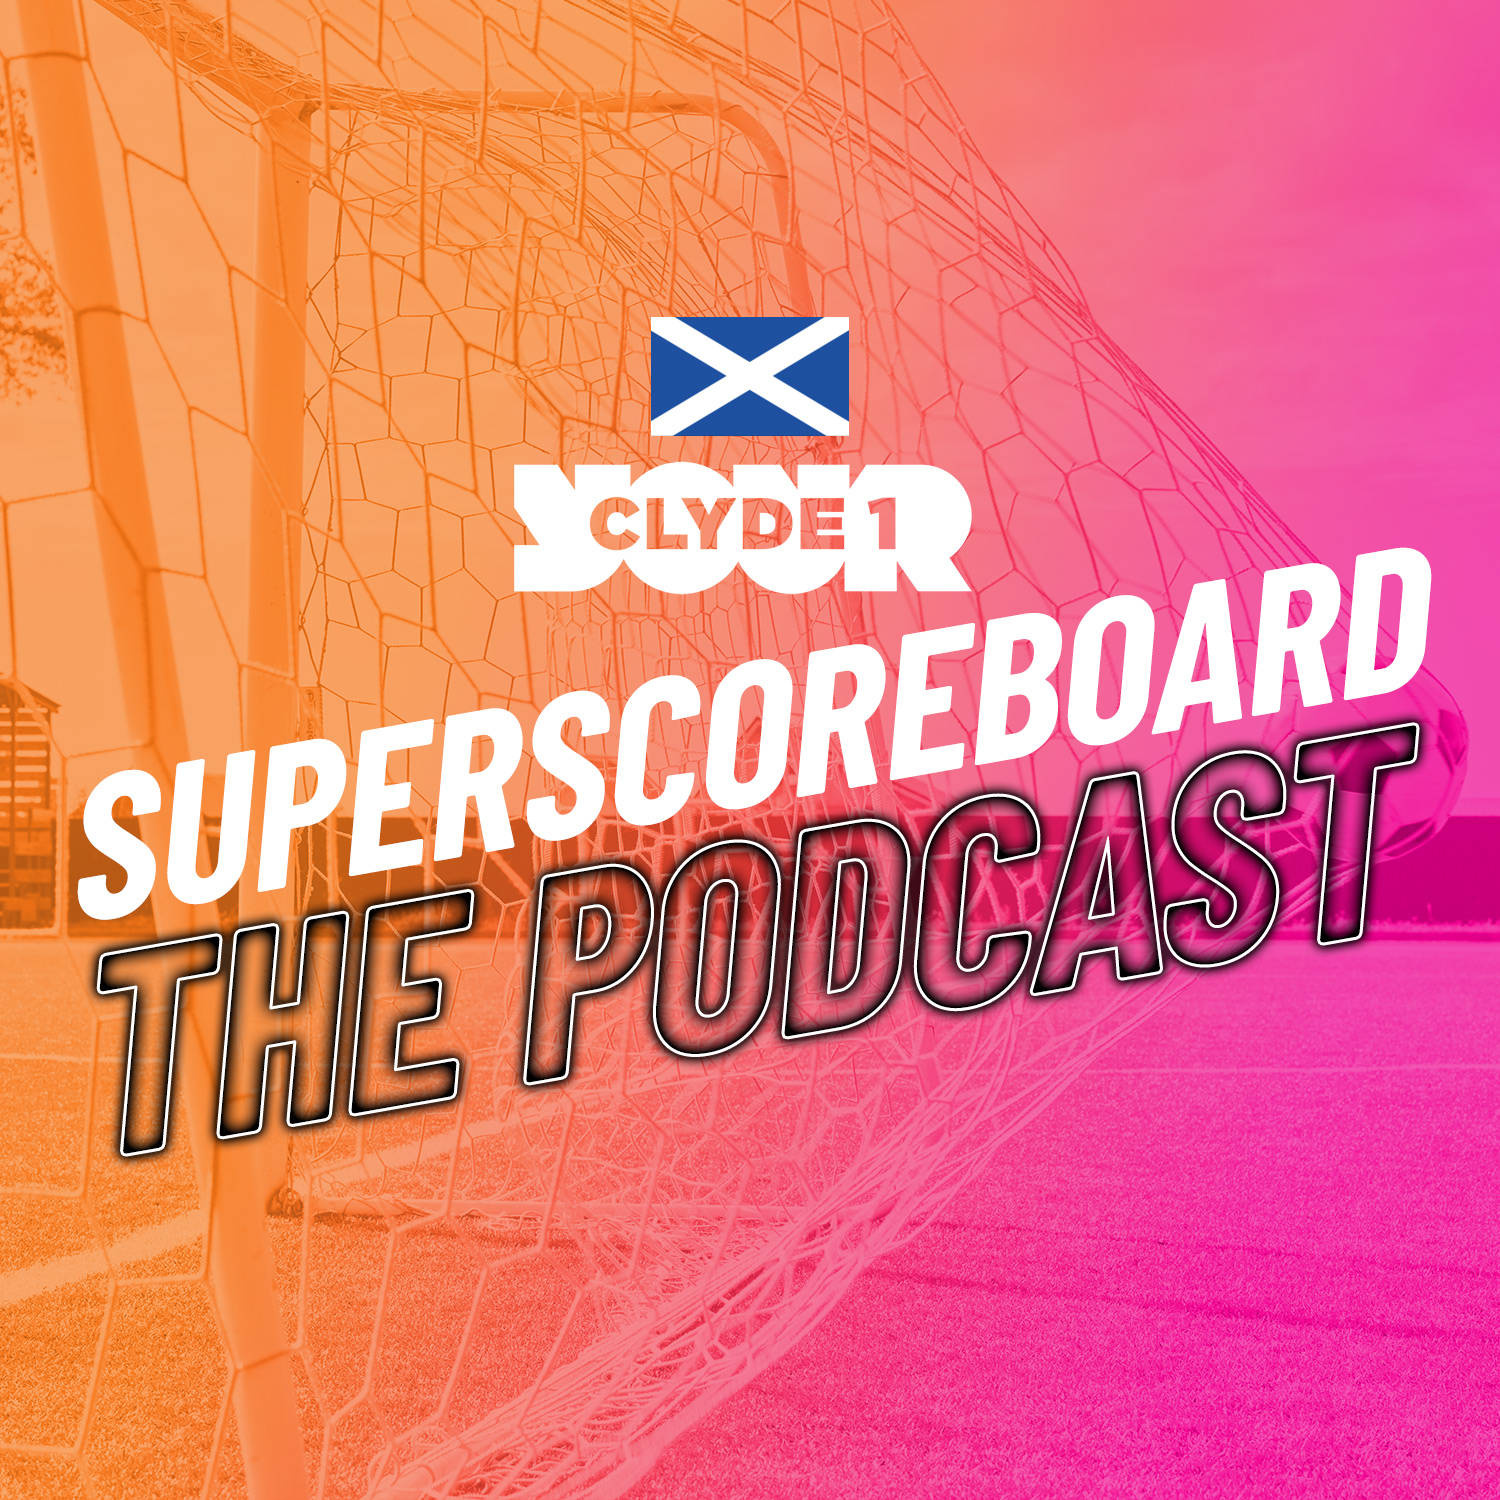 Monday 22nd April Clyde 1 Superscoreboard